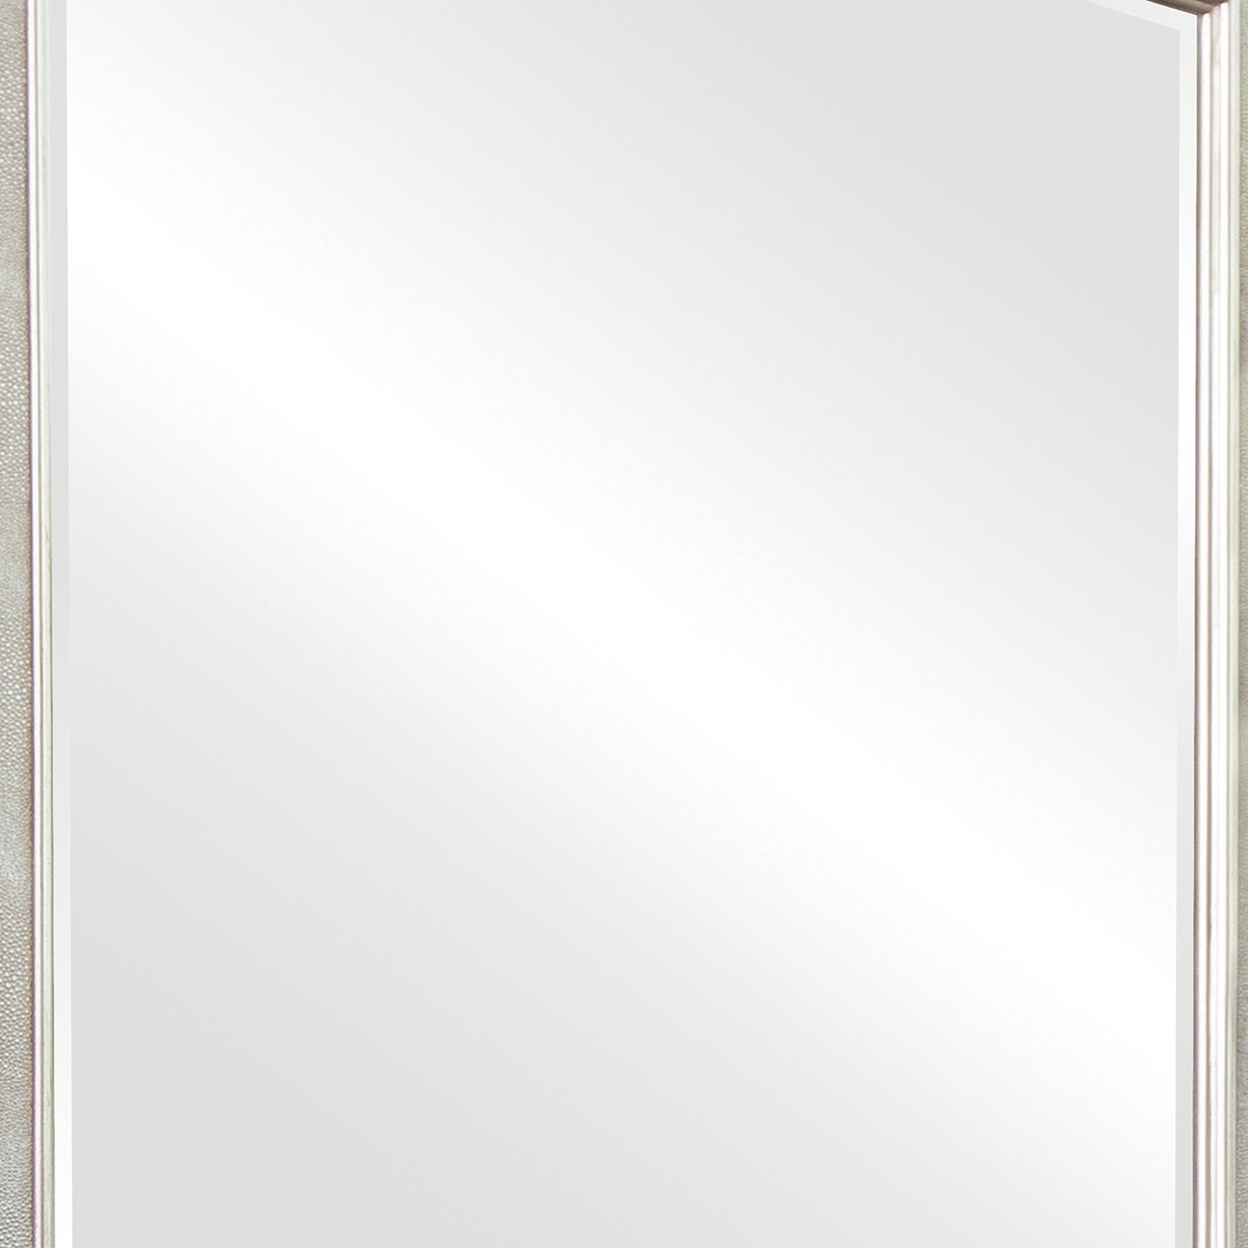 36 Inch Wooden Frame Arched Vanity Mirror, Silver- Saltoro Sherpi